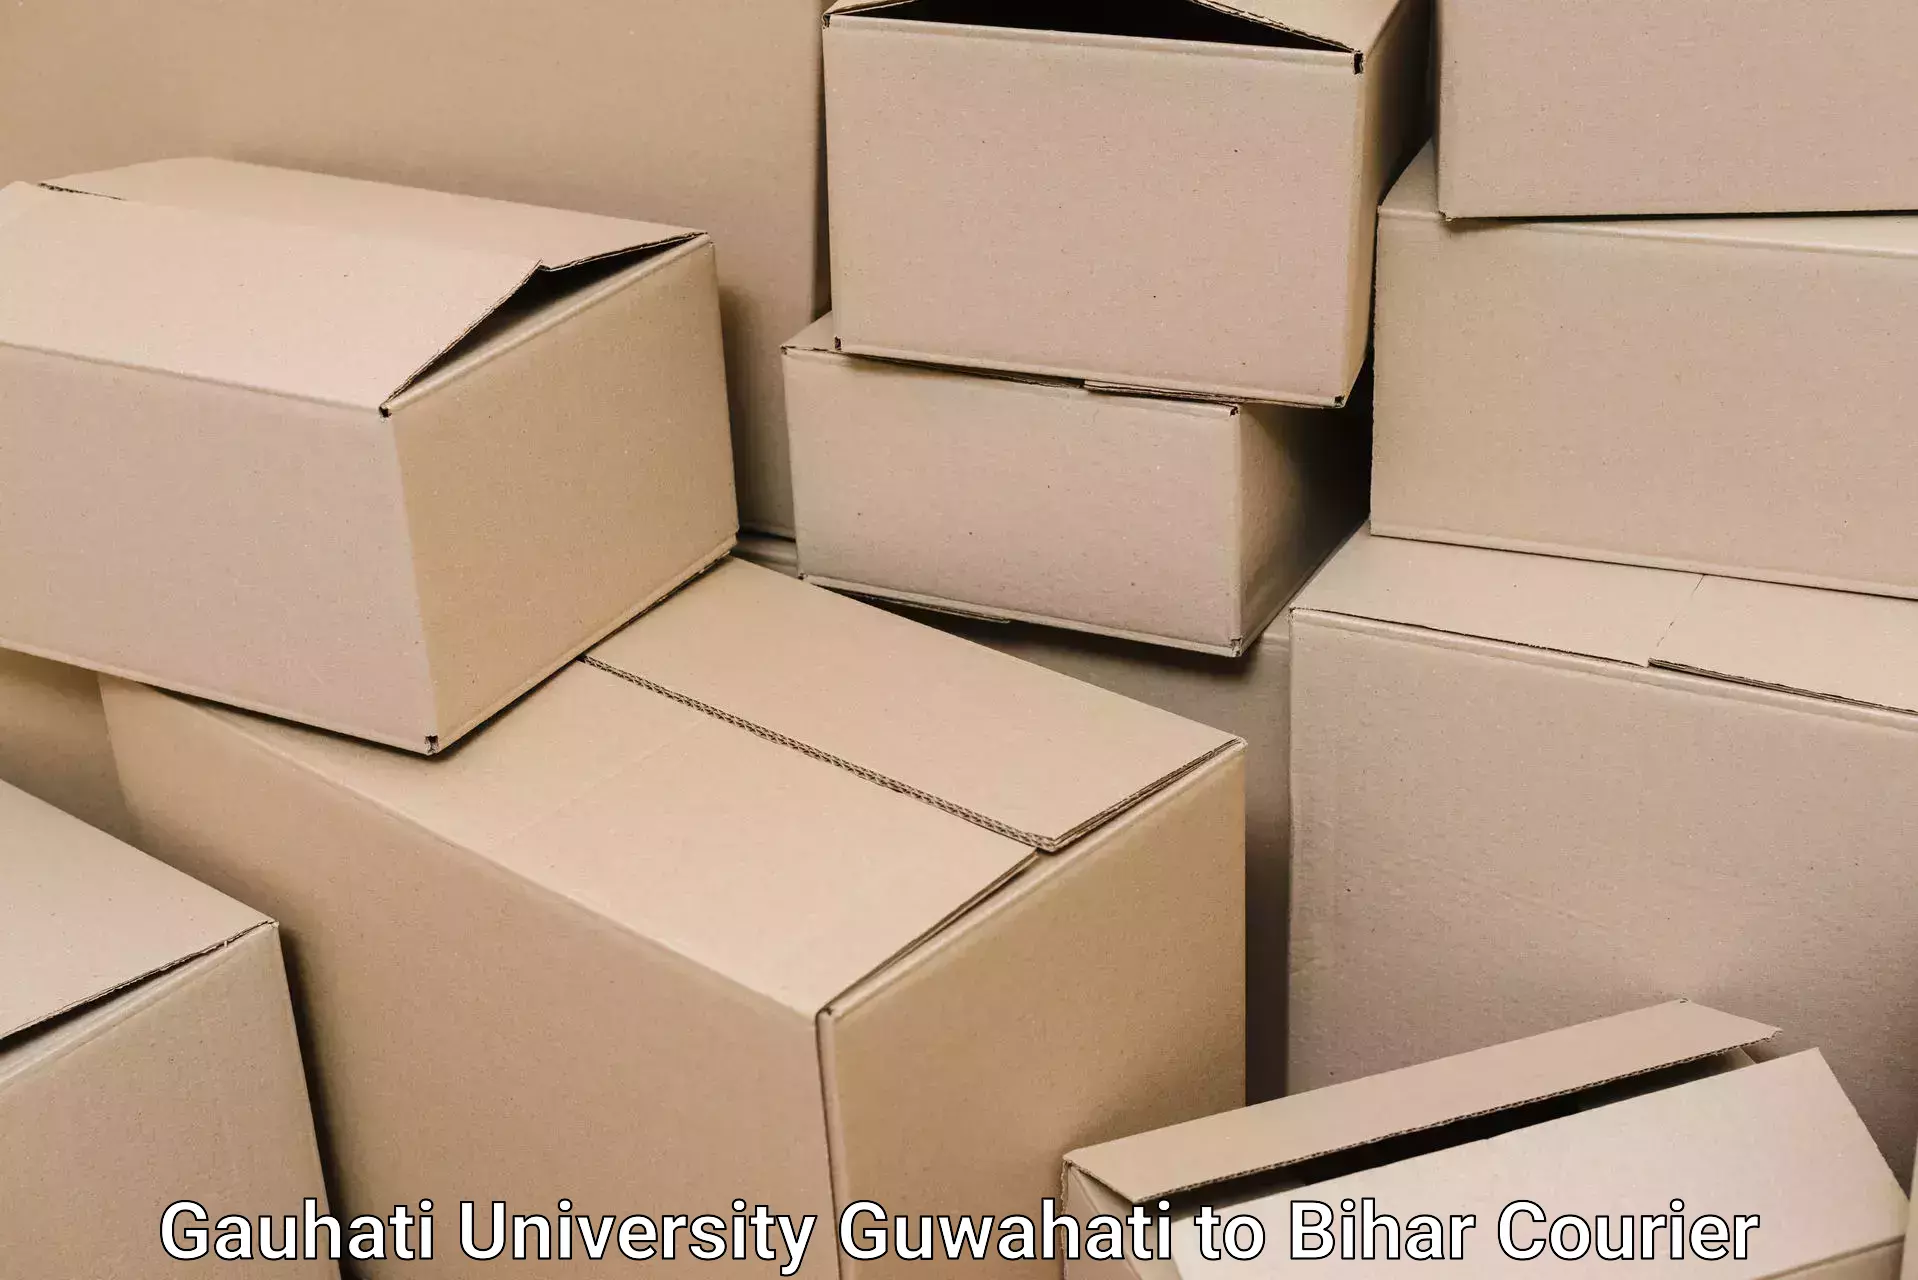 Quality relocation assistance in Gauhati University Guwahati to Aurangabad Bihar